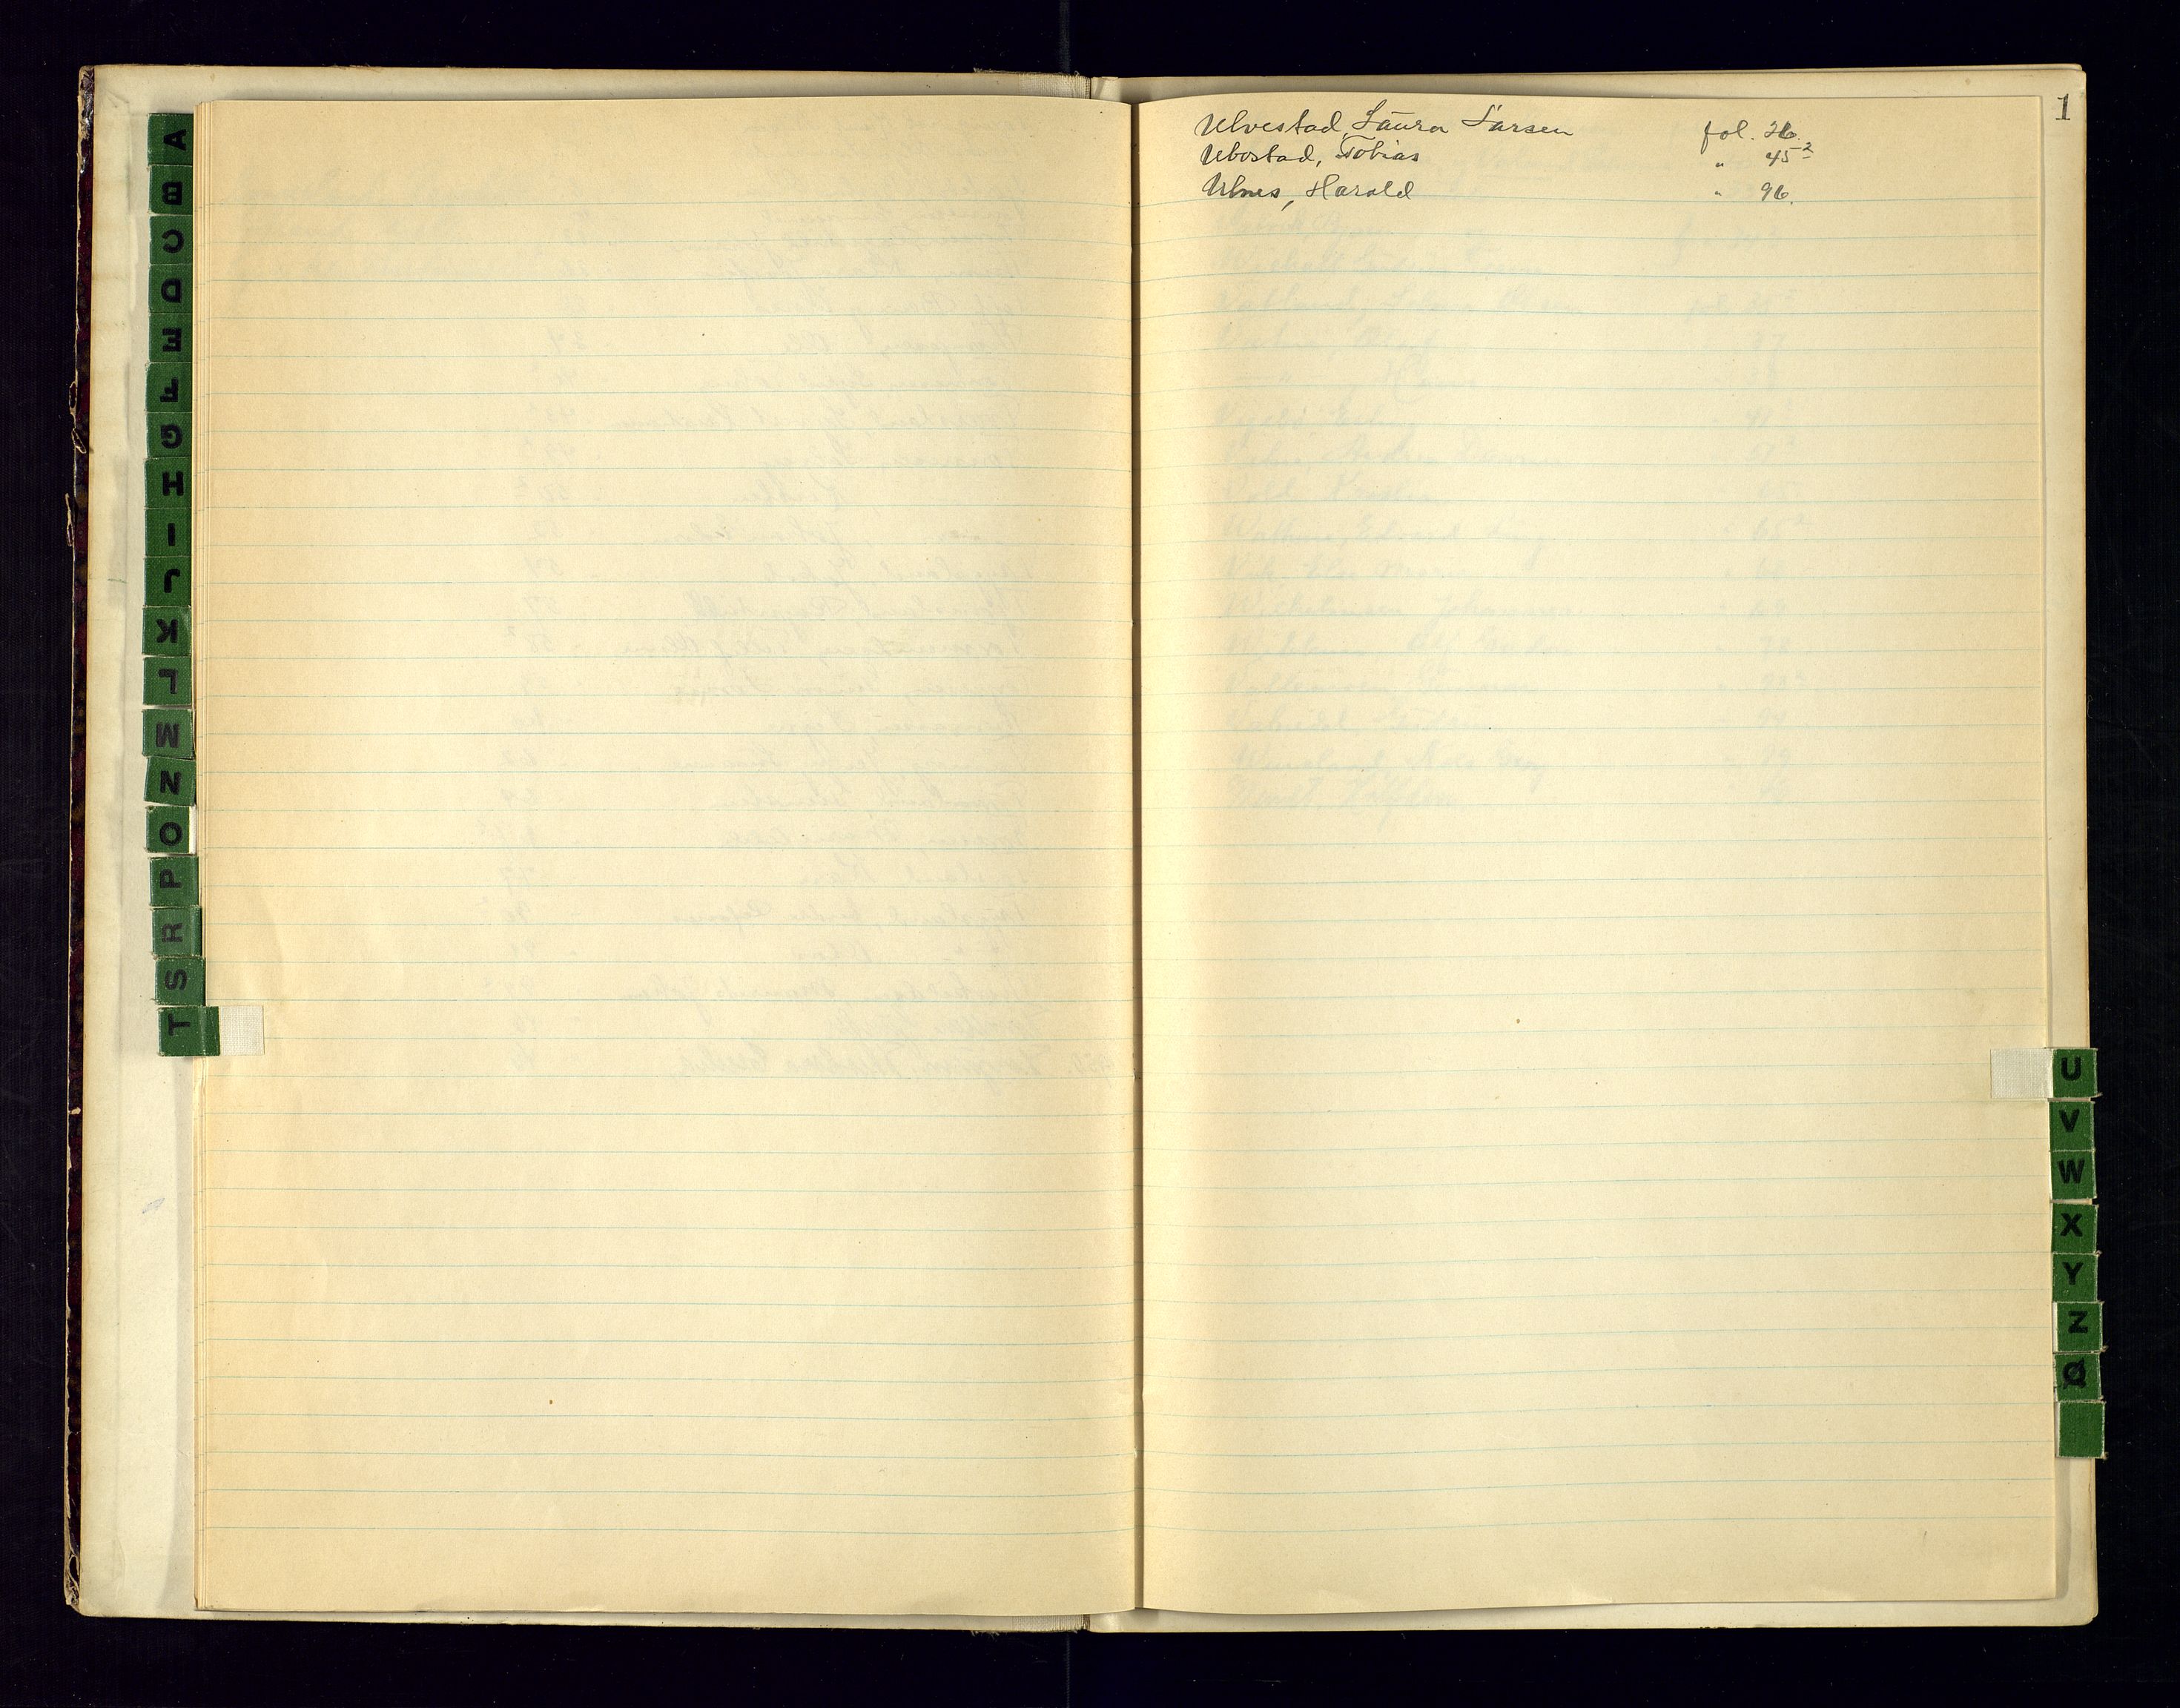 Mandal sorenskriveri, SAK/1221-0005/001/L/Ld/L0001: Vigselbok nr 1, 1920-1943